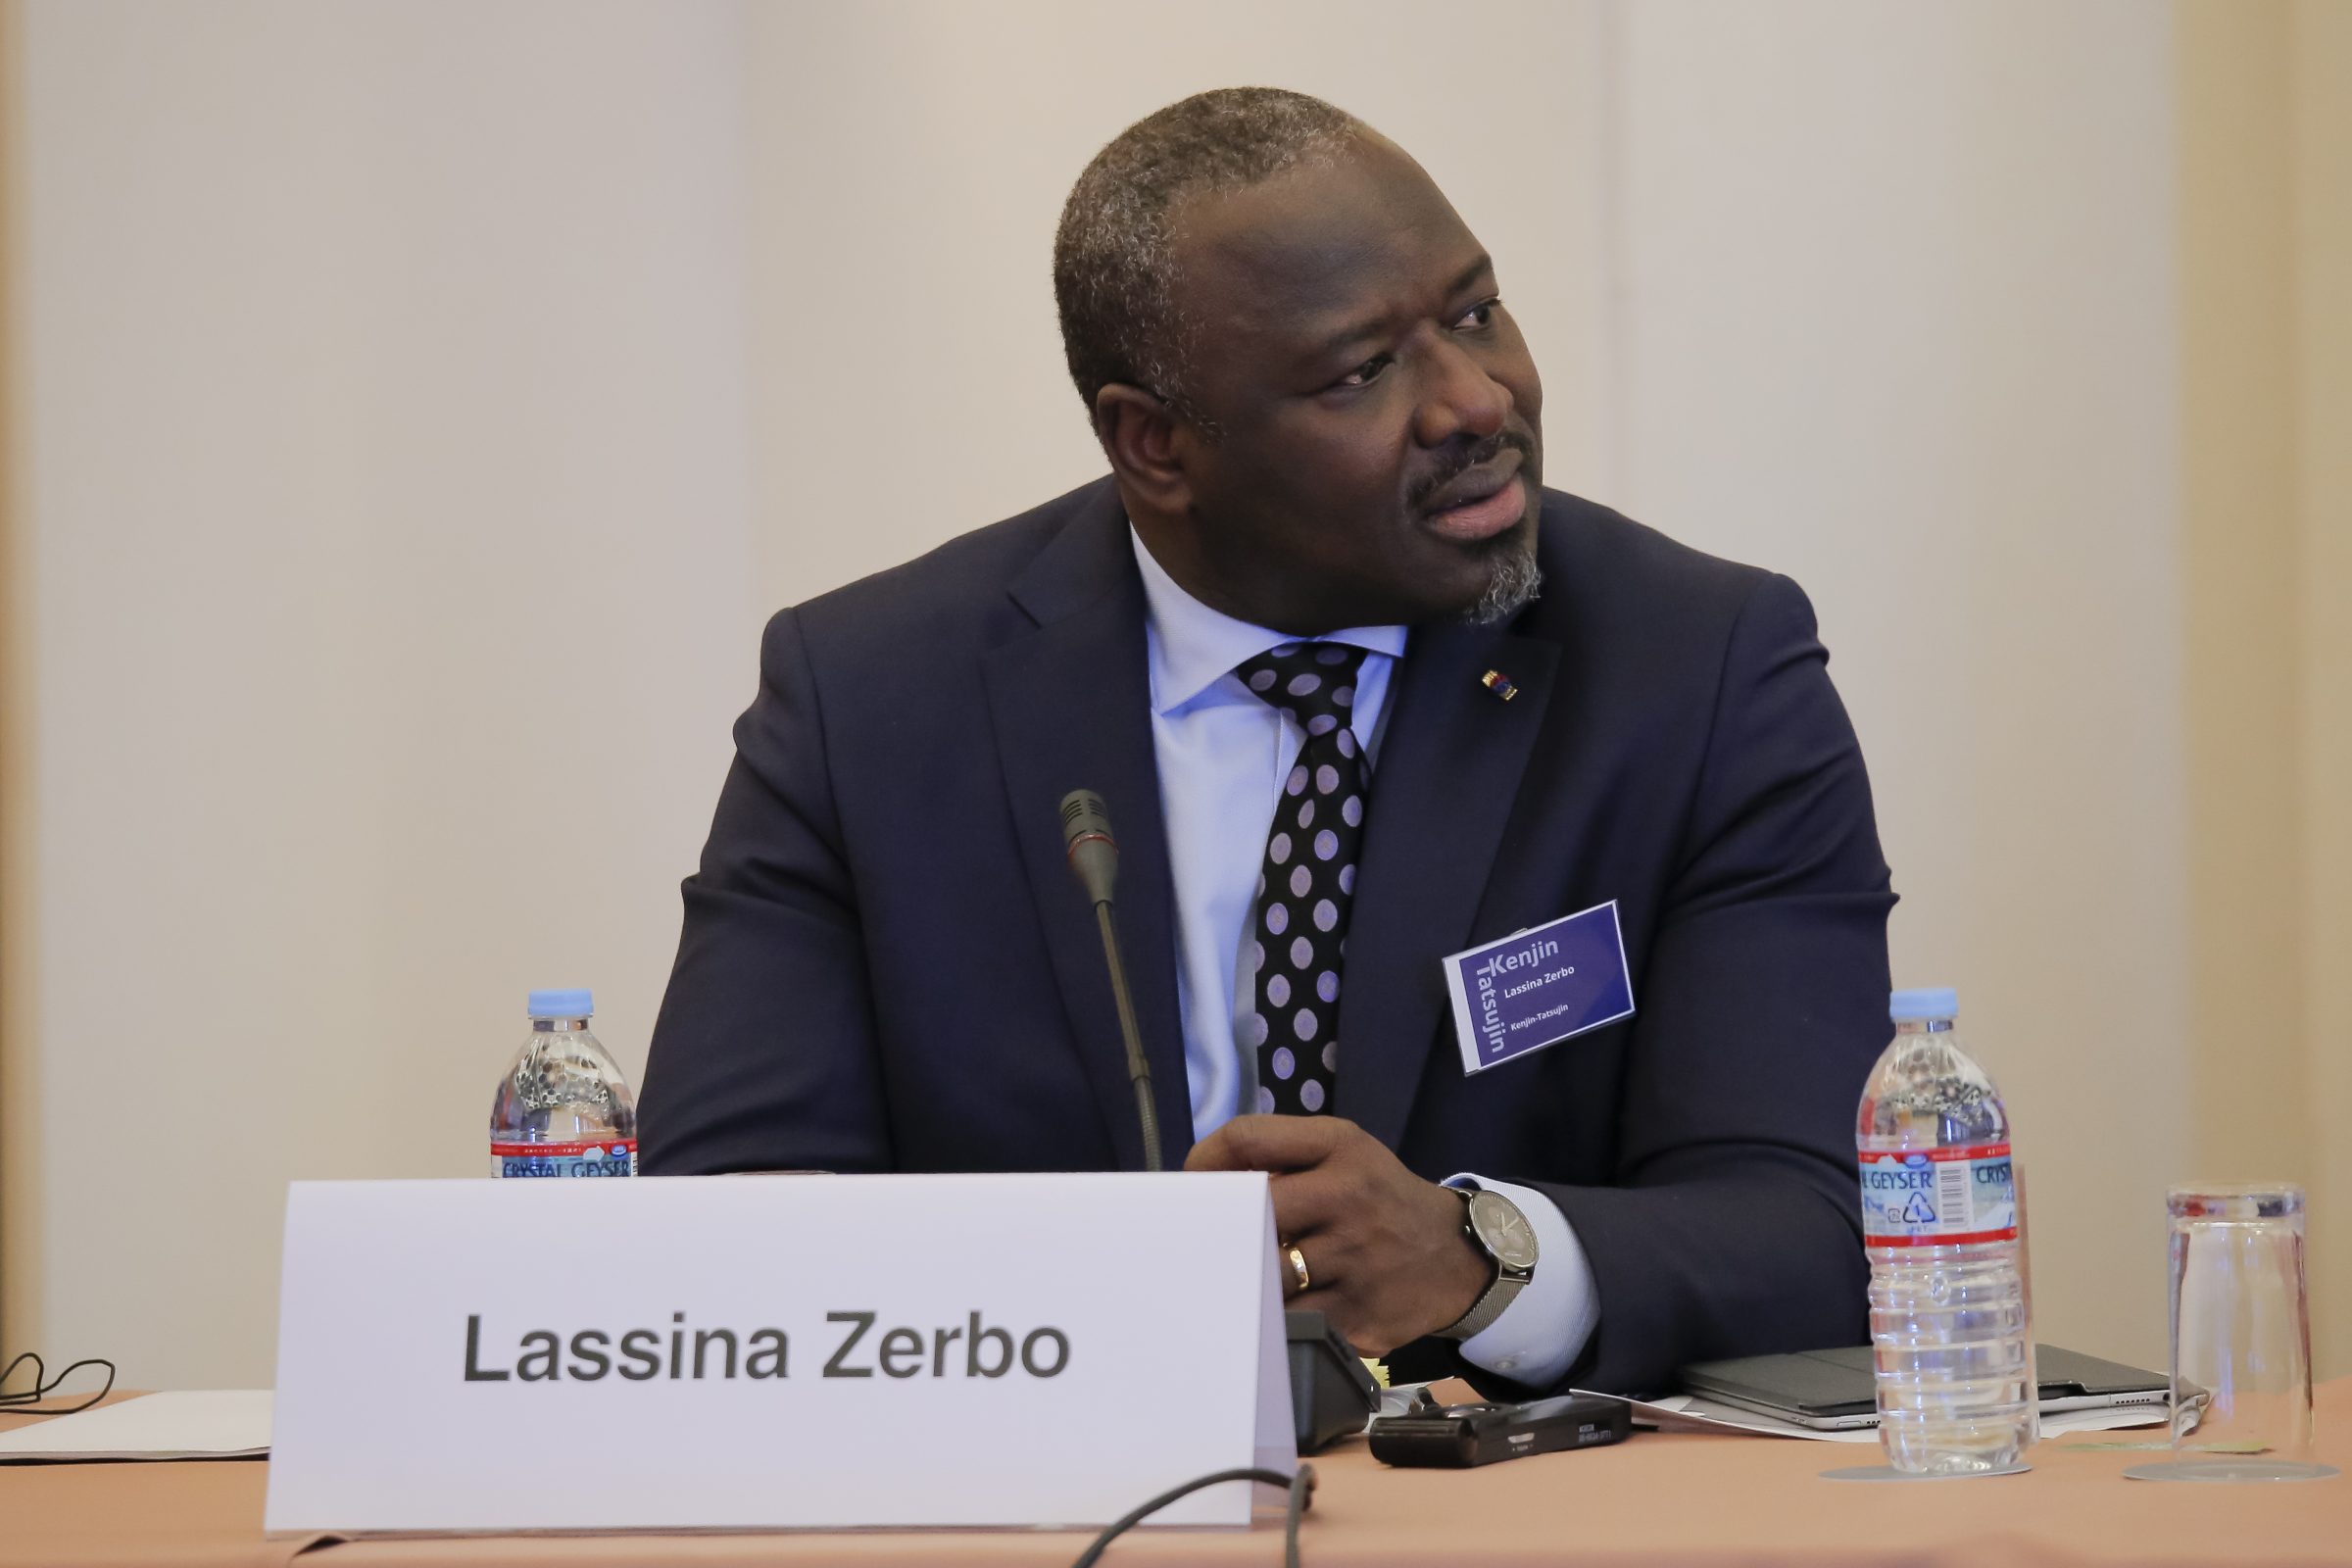 Dr. Lassina Zerbo Appointed Prime Minister of Burkina Faso